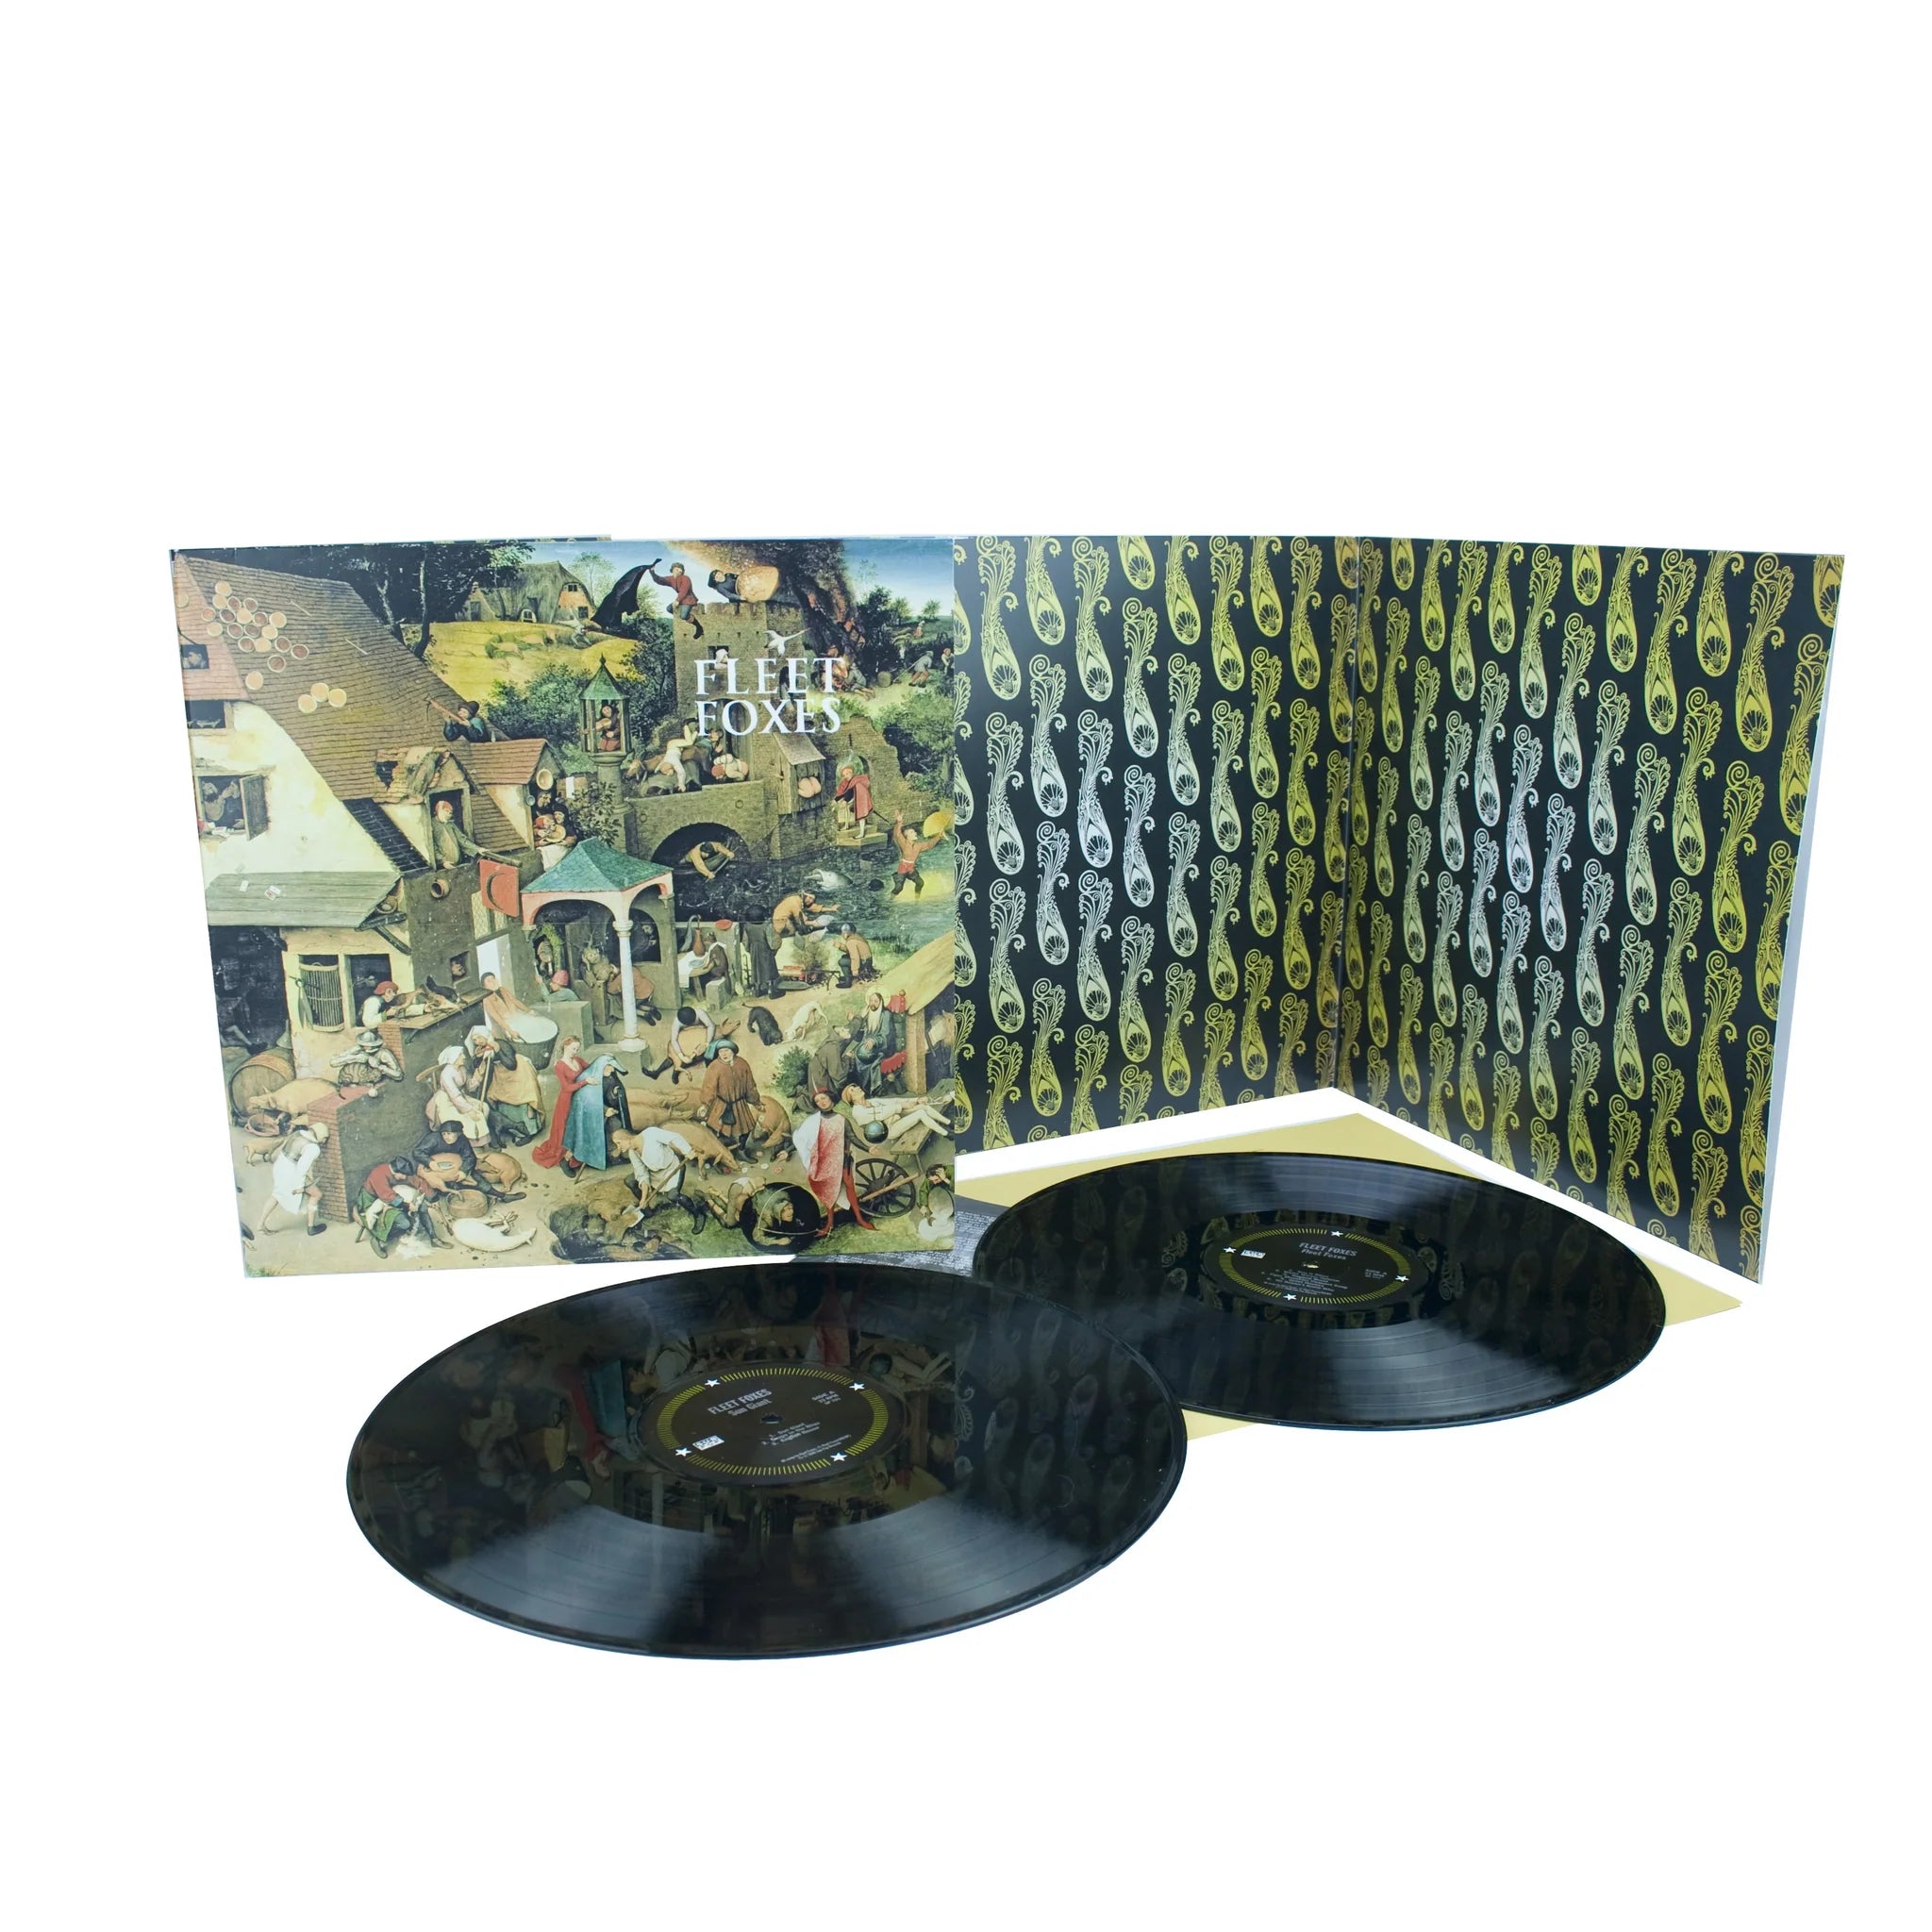 Fleet Foxes - Fleet Foxes: Vinyl 2LP